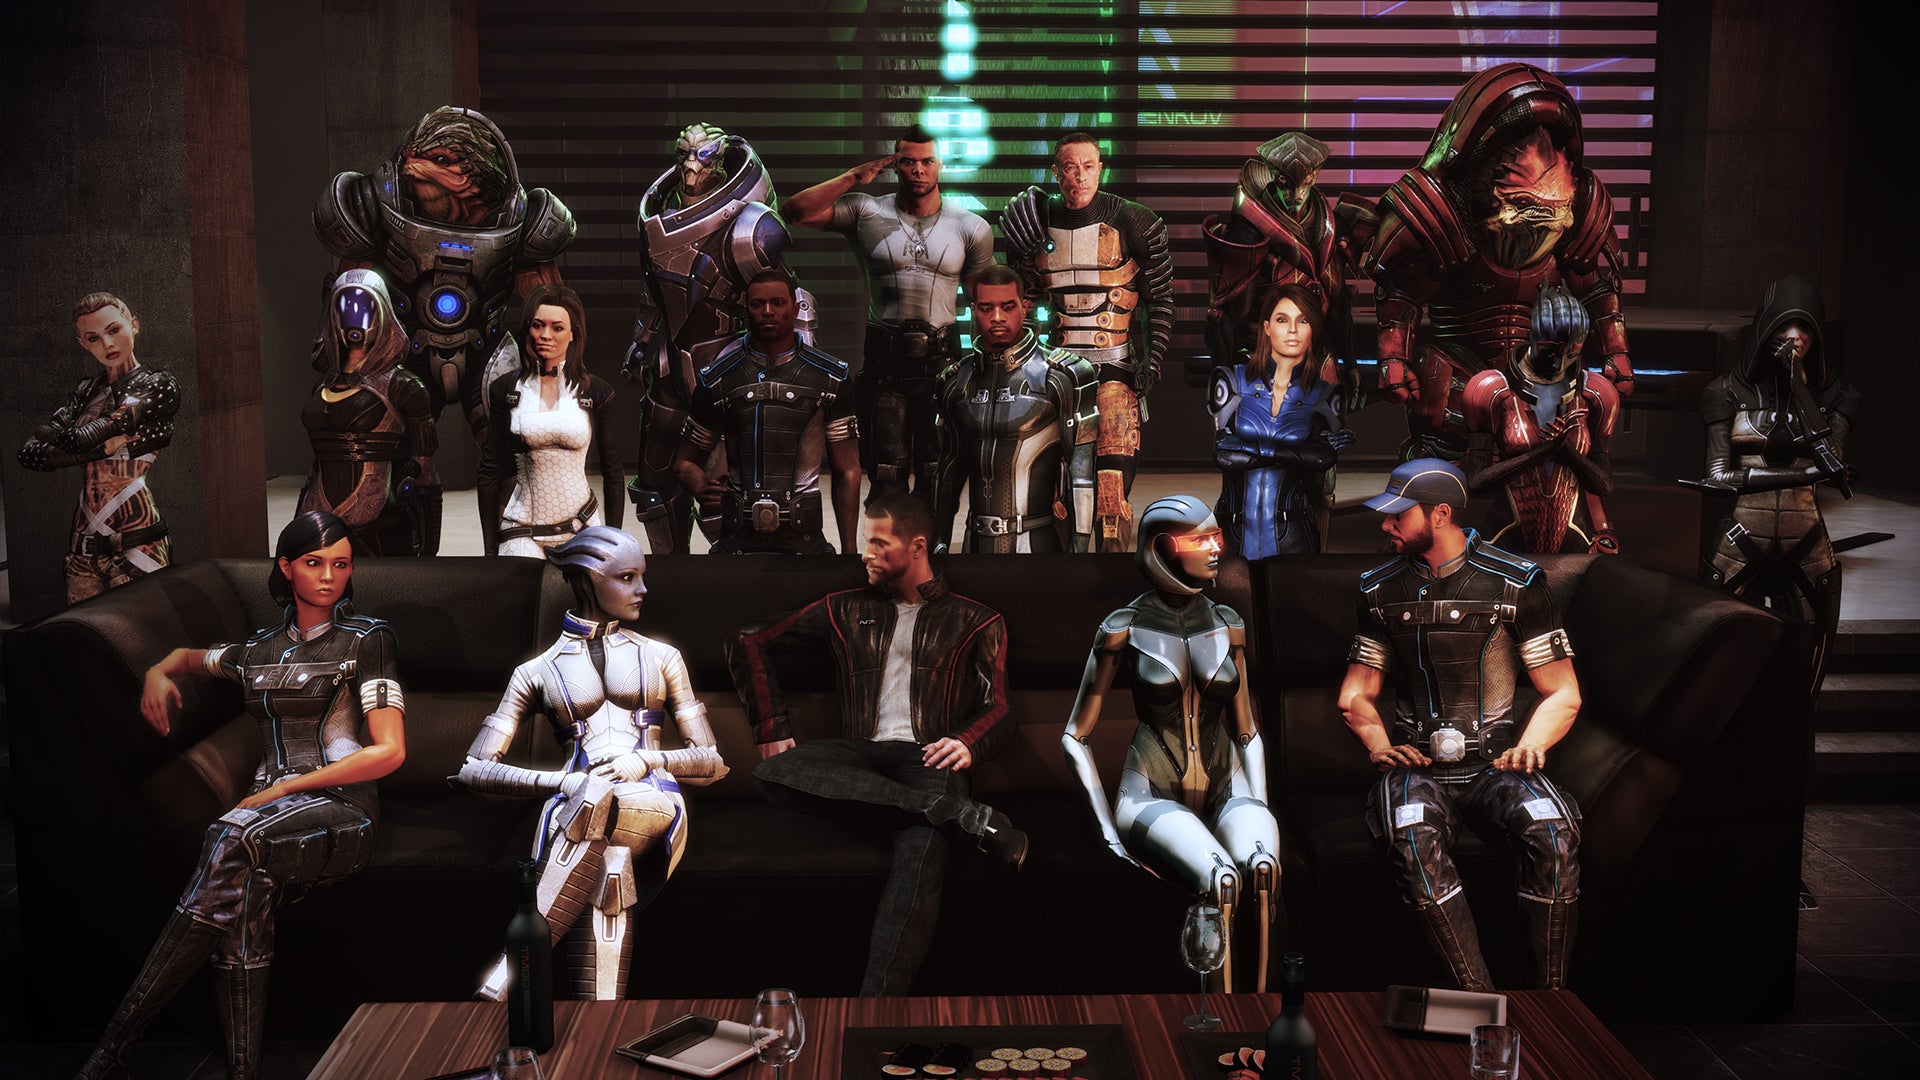 Вся Команда Шепарда В Трилогии Mass Effect Сидит Вместе На Диване.